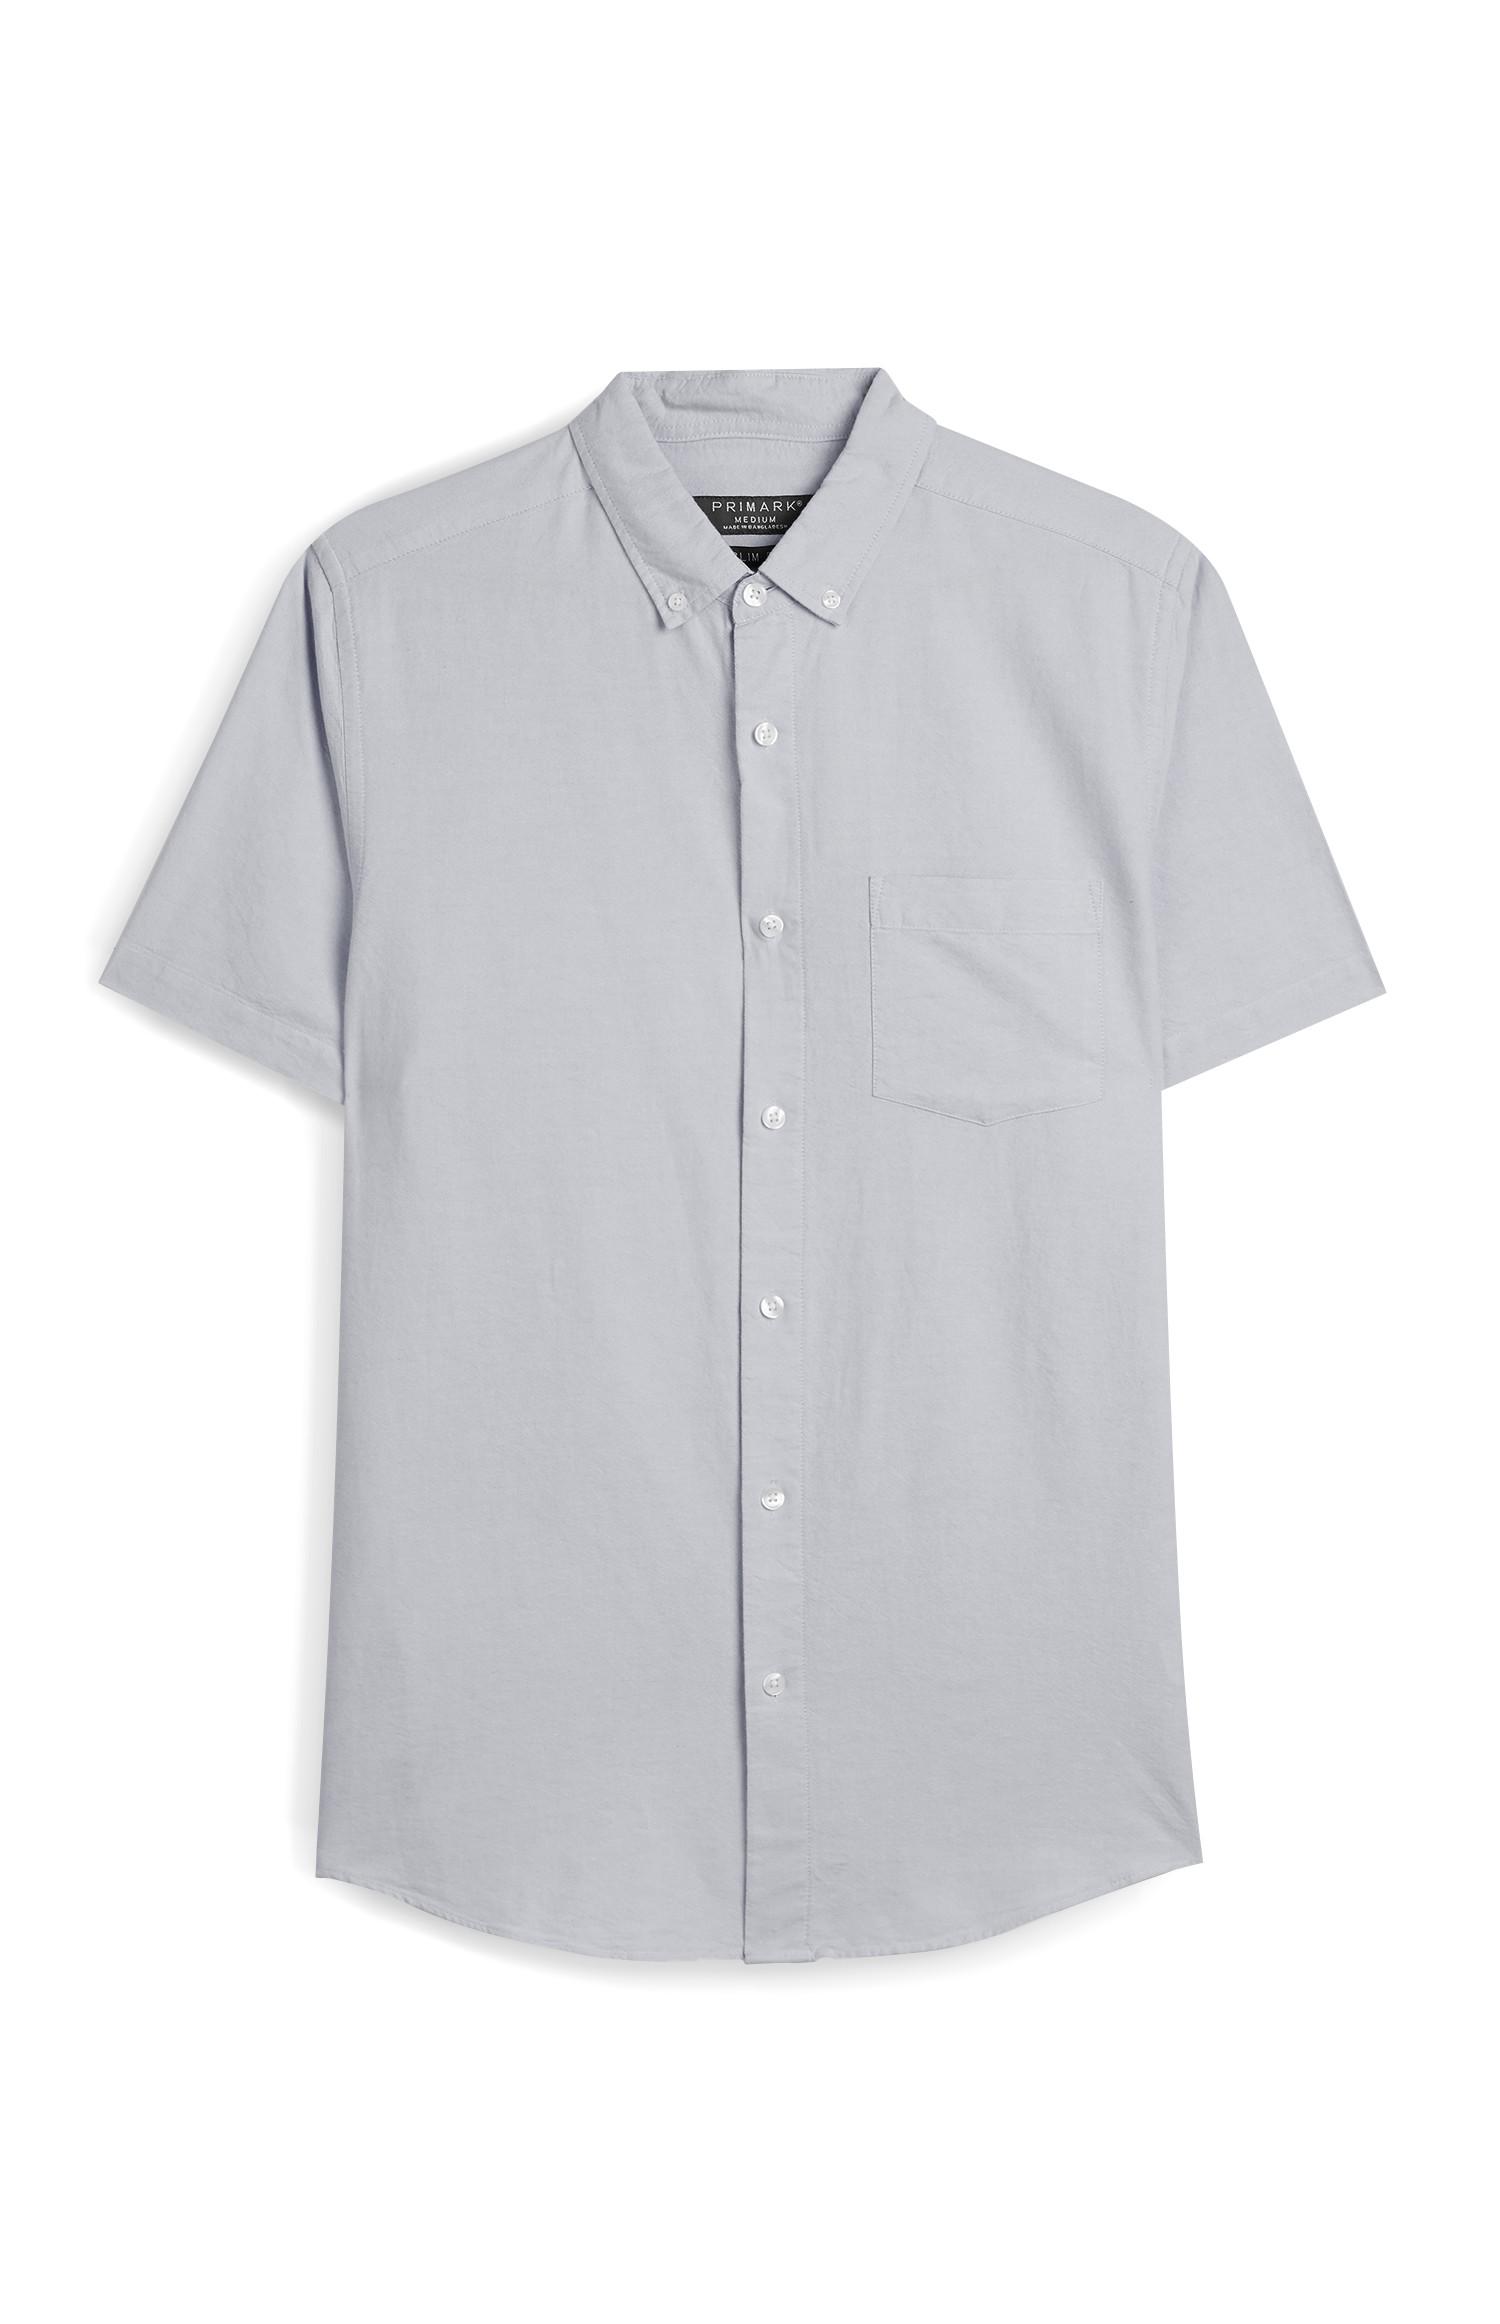 Mens Short Sleeve Shirts | Summer Shirts | Primark UK